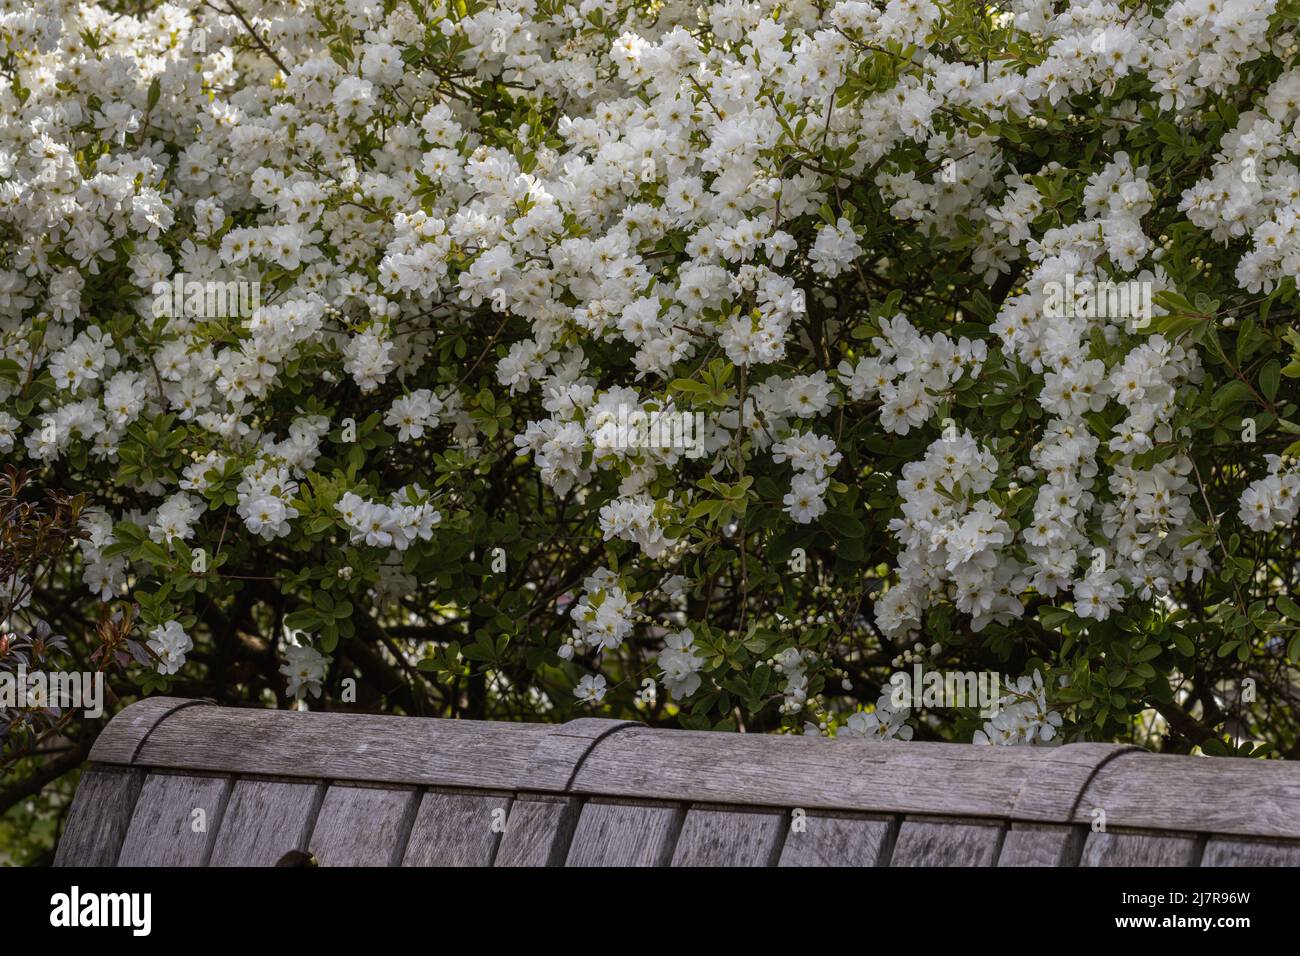 Mass of white Exochorda macrantha The Bride flowers in spring Stock Photo